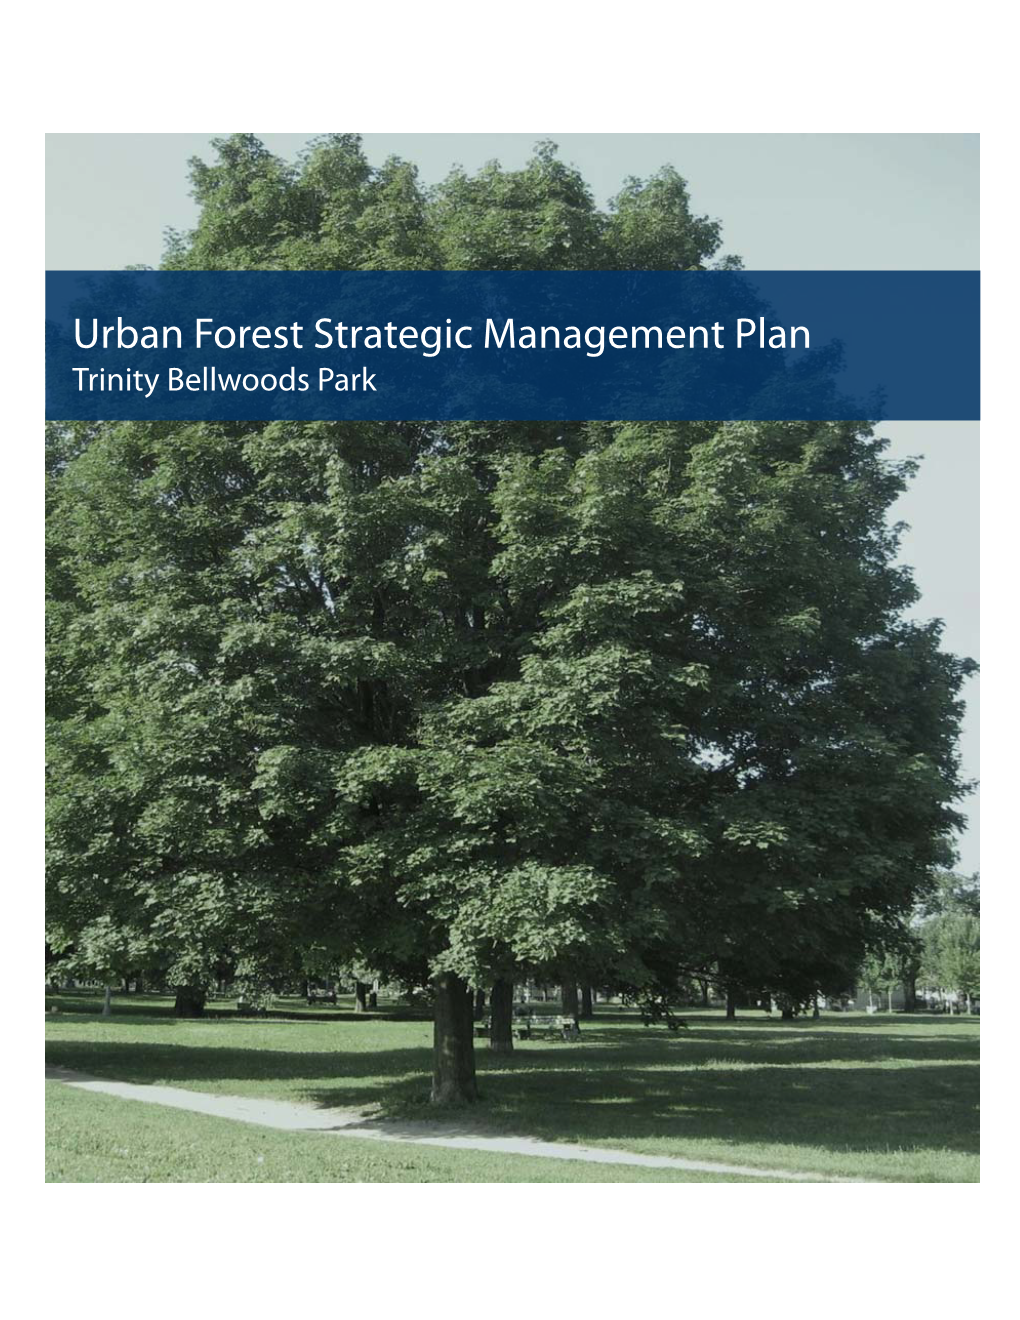 Sustainable Urban Forest Management Plan